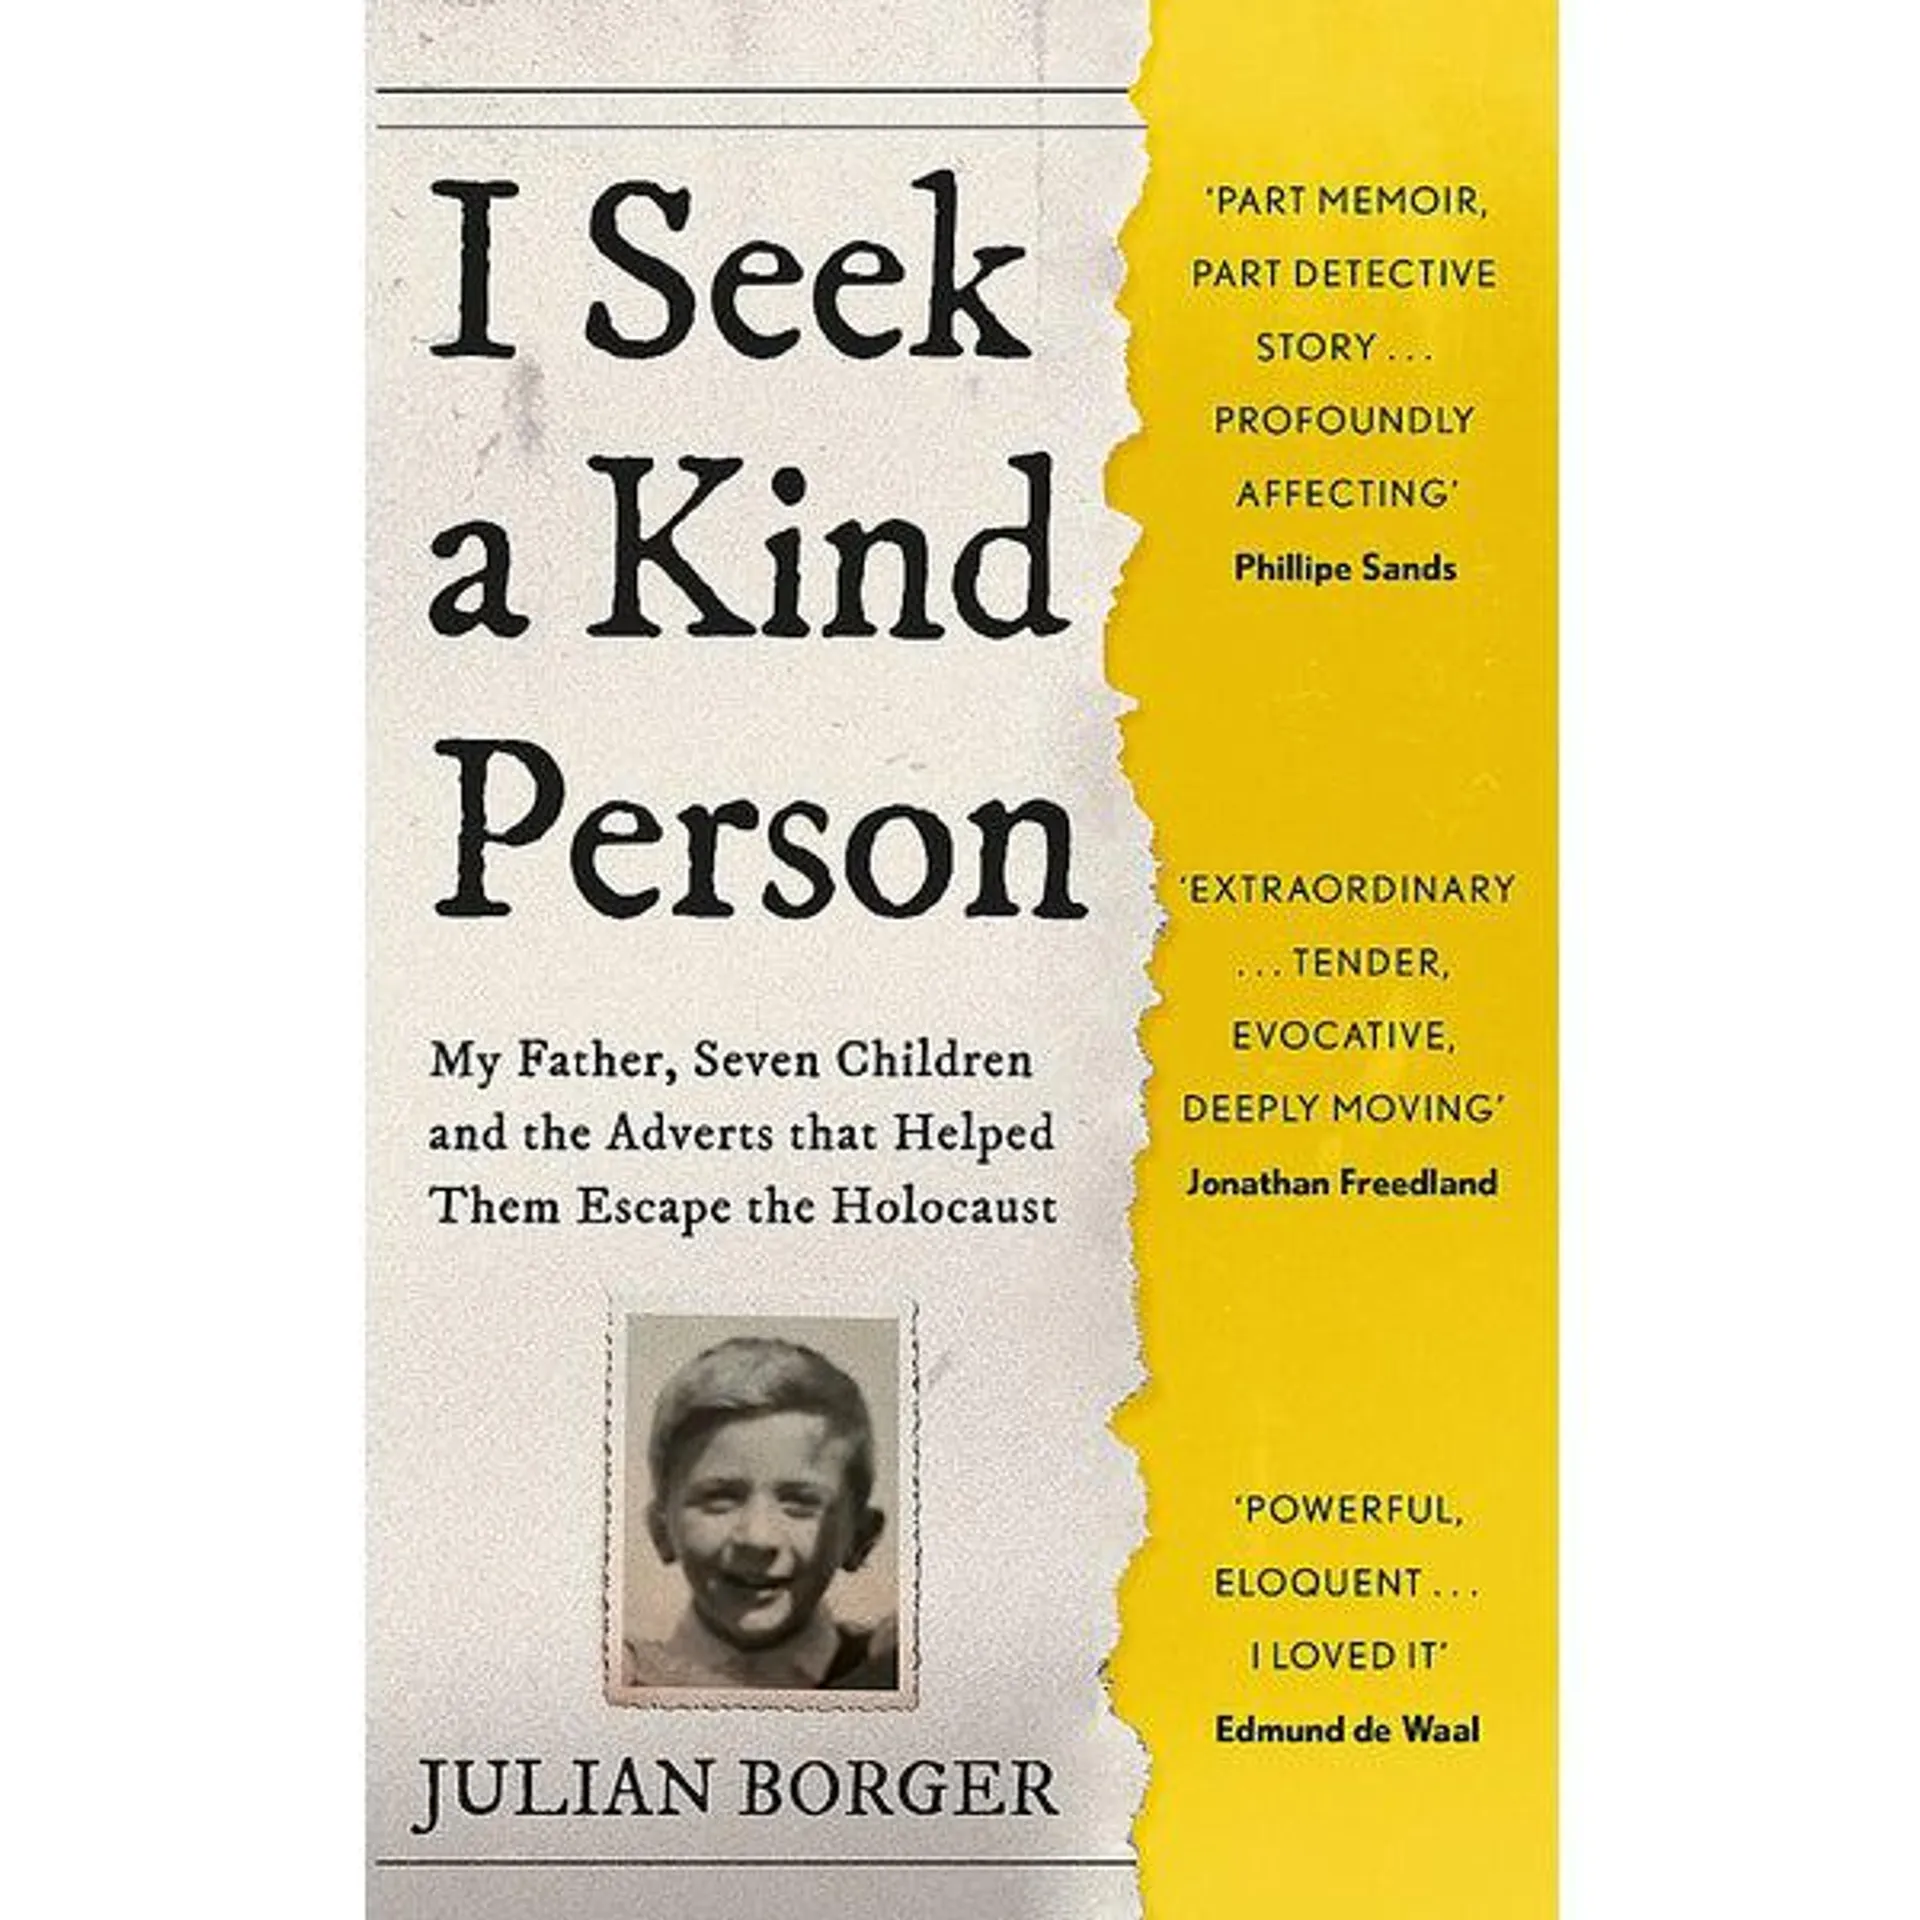 I Seek a Kind Person Trade Paperback